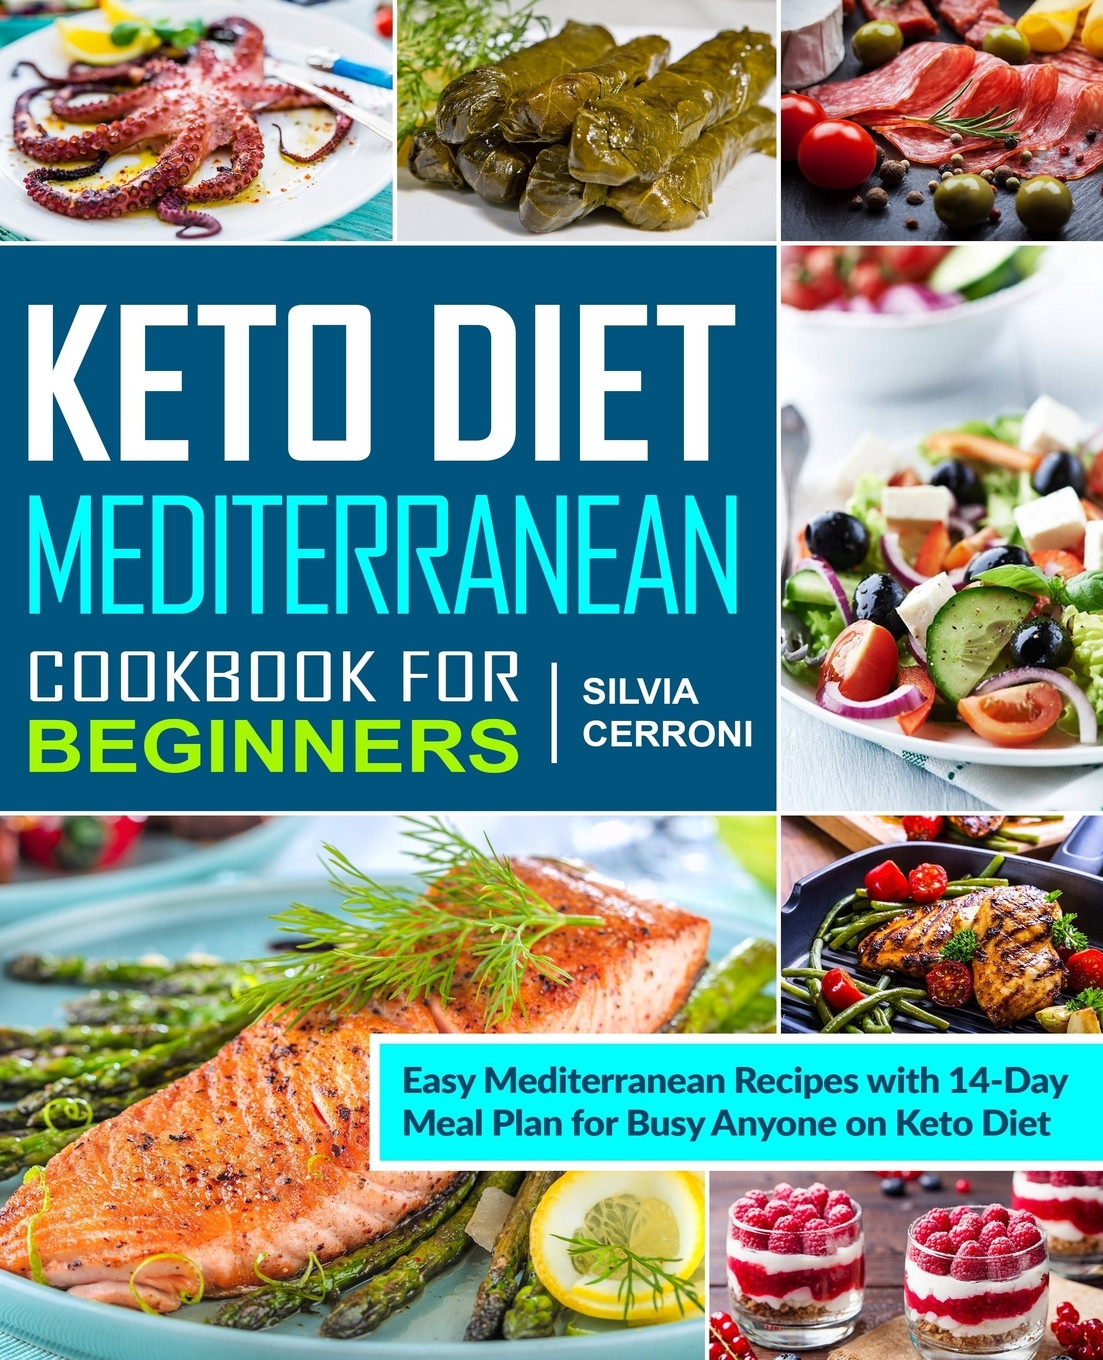 Mediterranean Keto Diet Recipes
 Keto Diet Mediterranean Cookbook for Beginners Easy